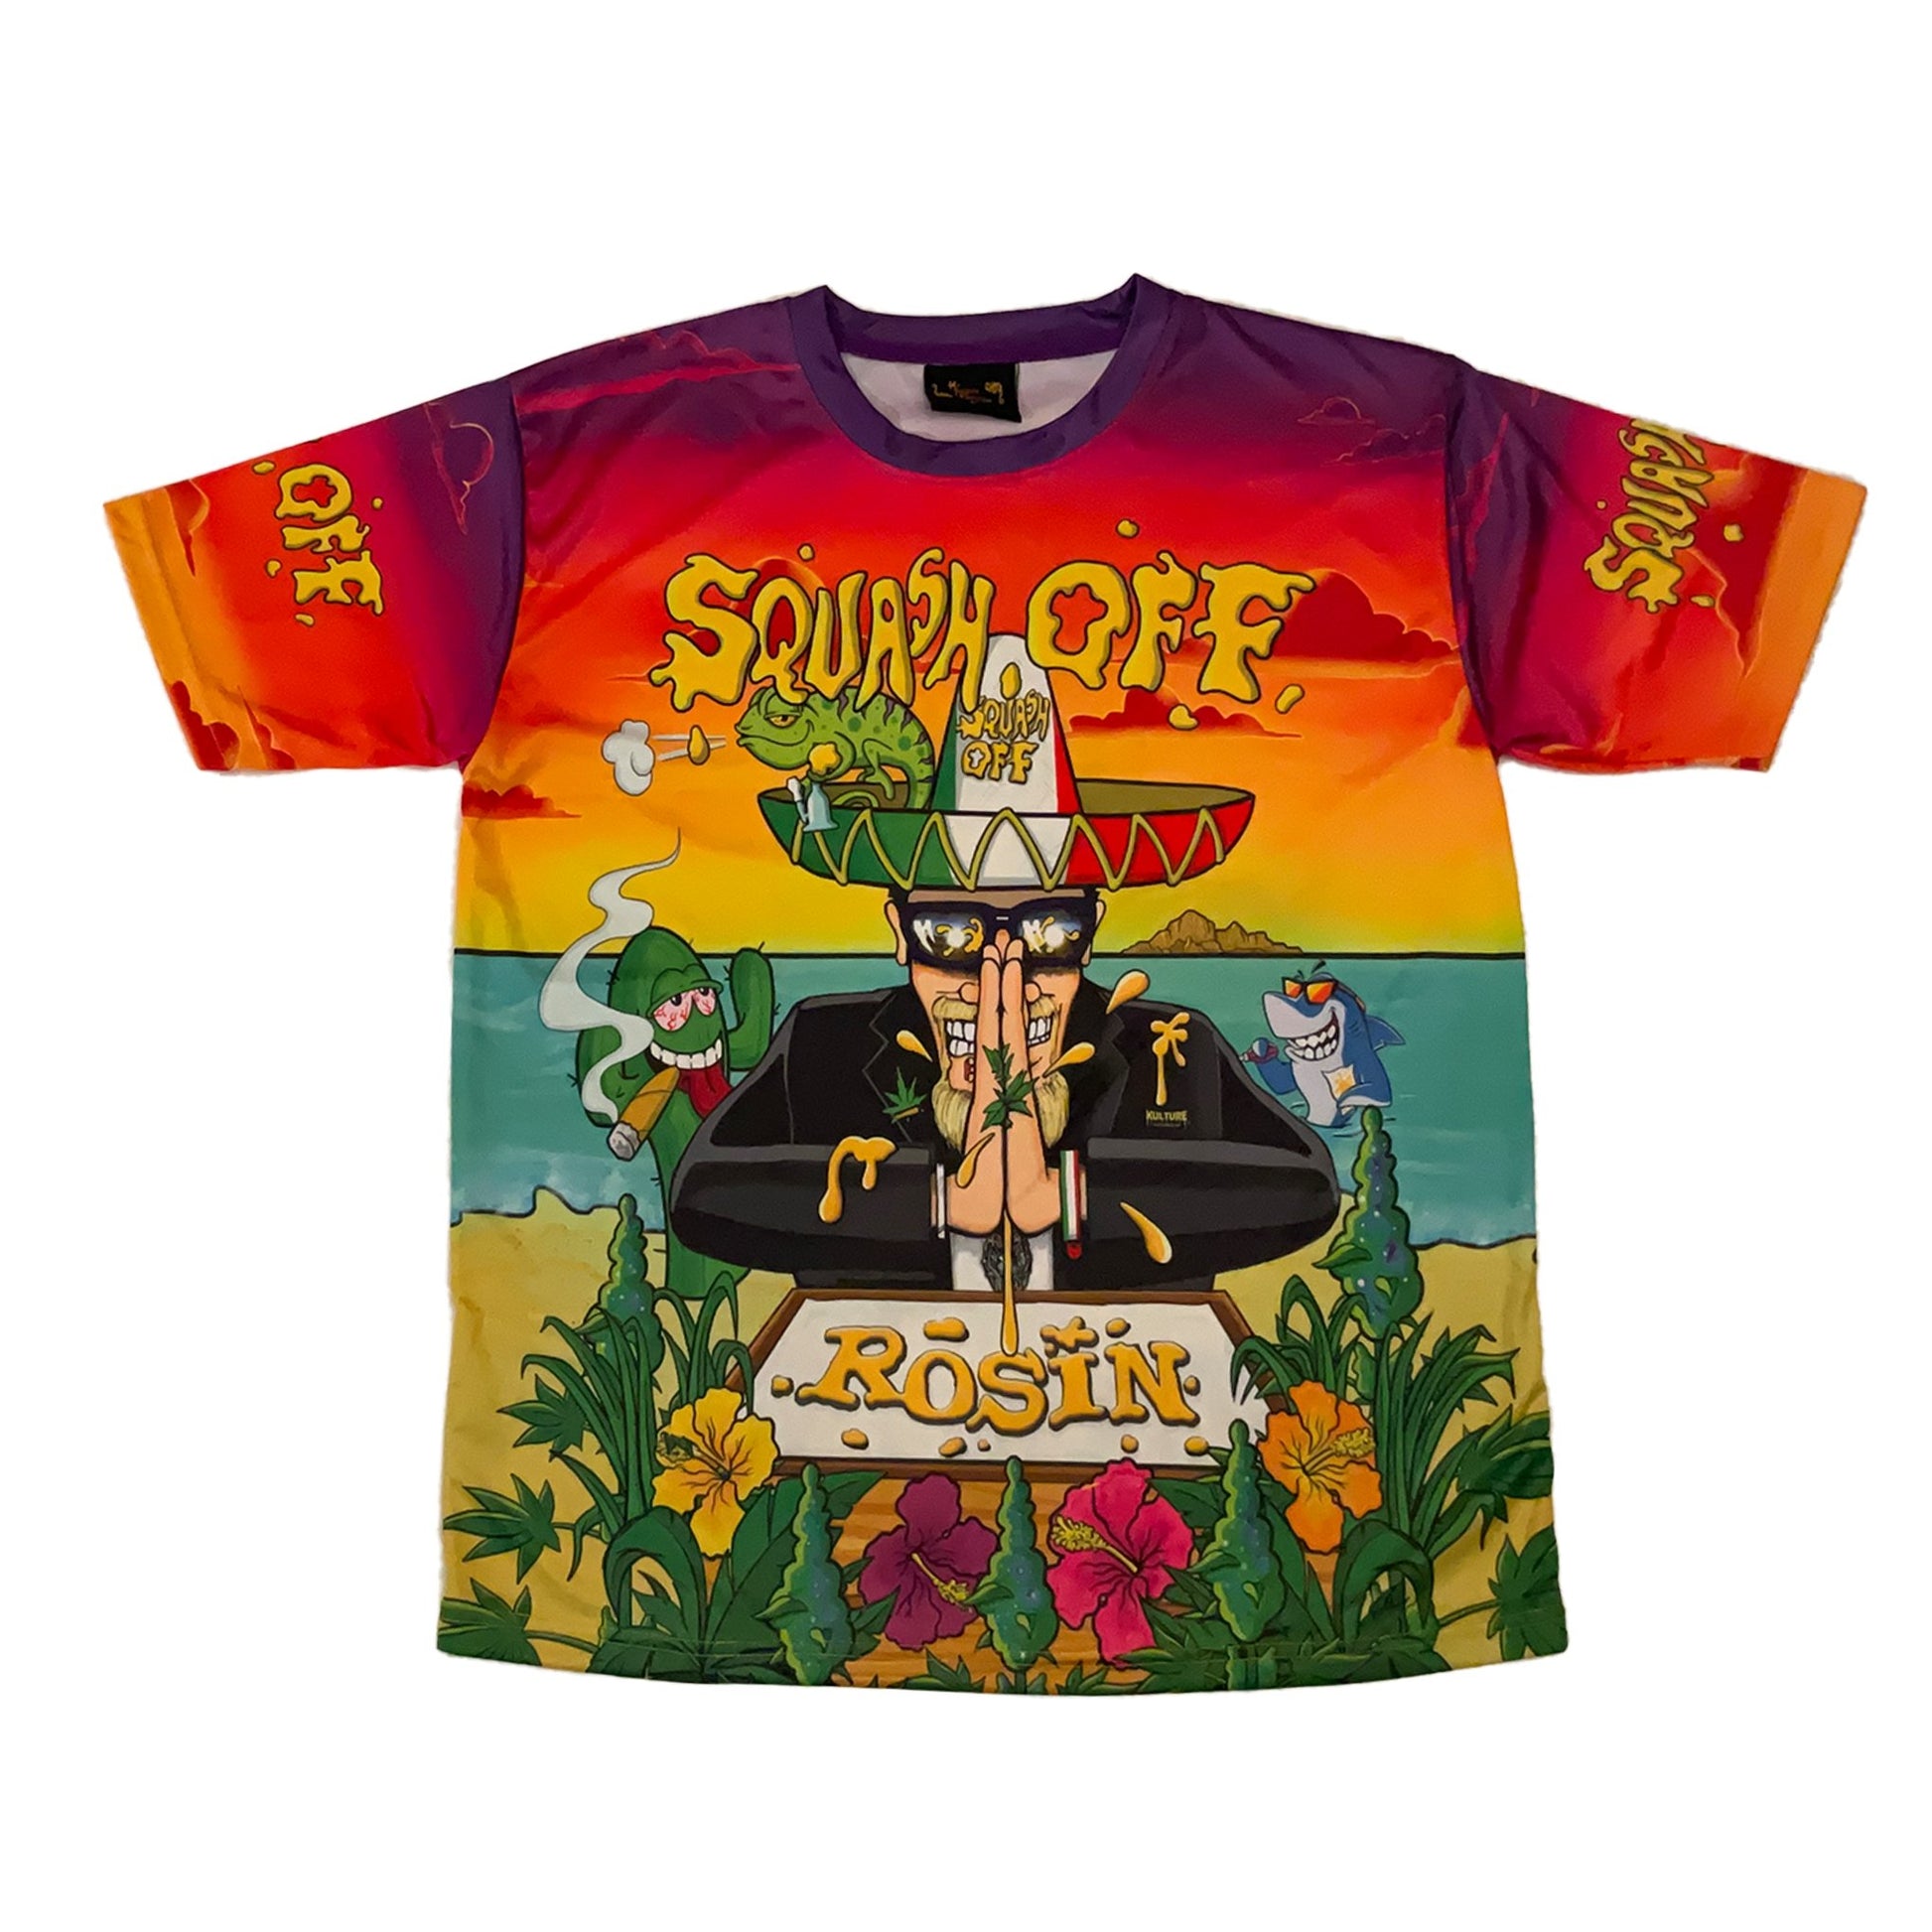 Squash Off "Tia Pacheco" - Dye Sublimation T-shirt (Limited) - Kulture Klothing Club -